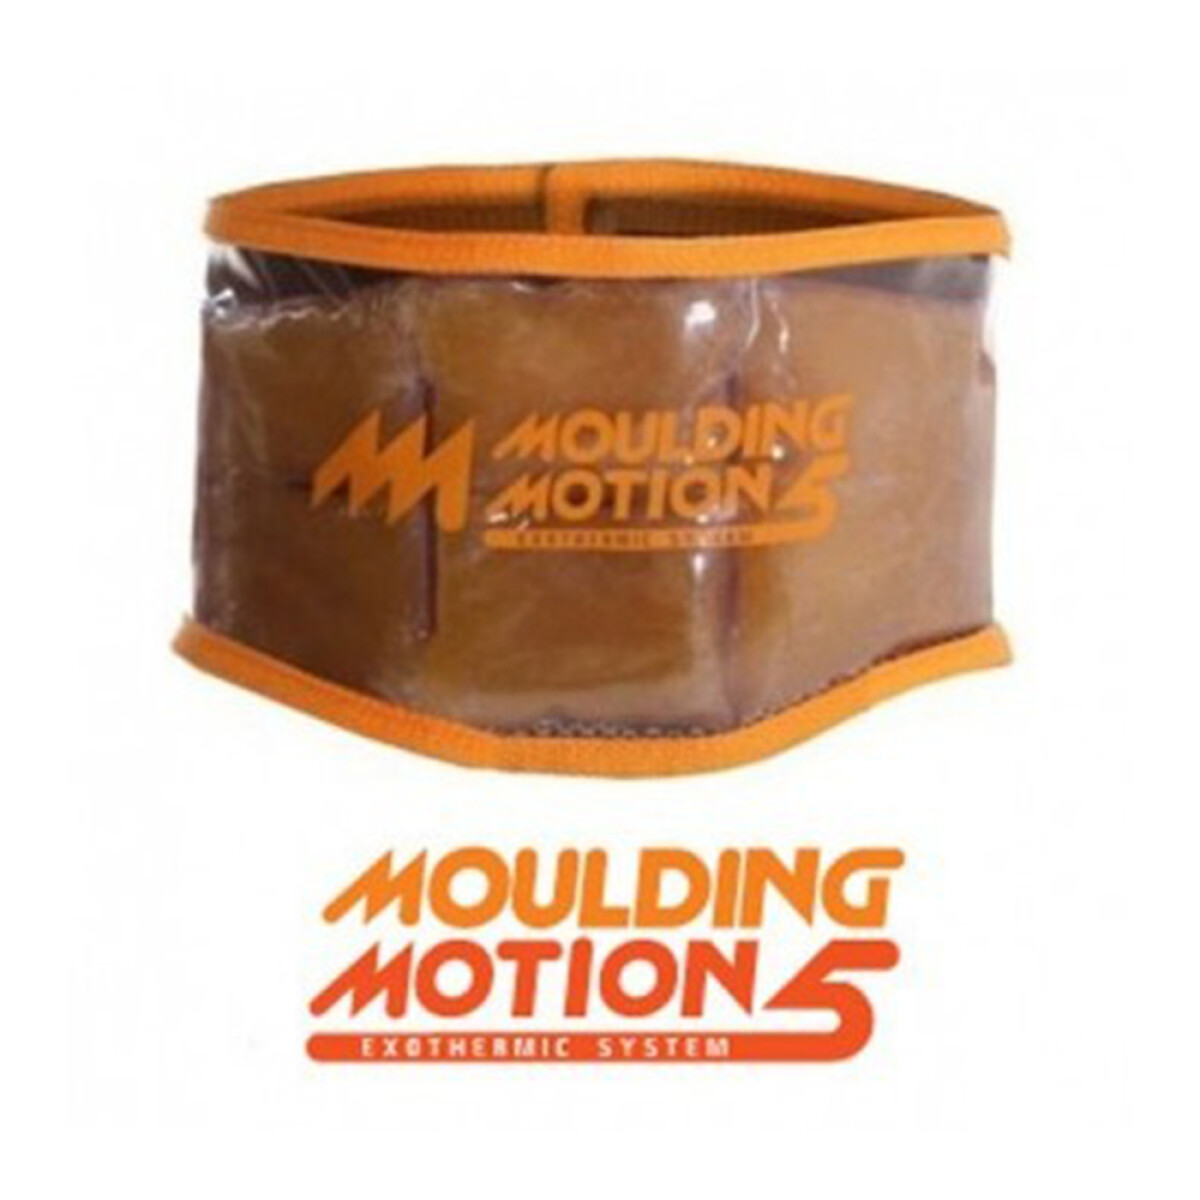 Cinturón reductor - Moulding Motion 5 